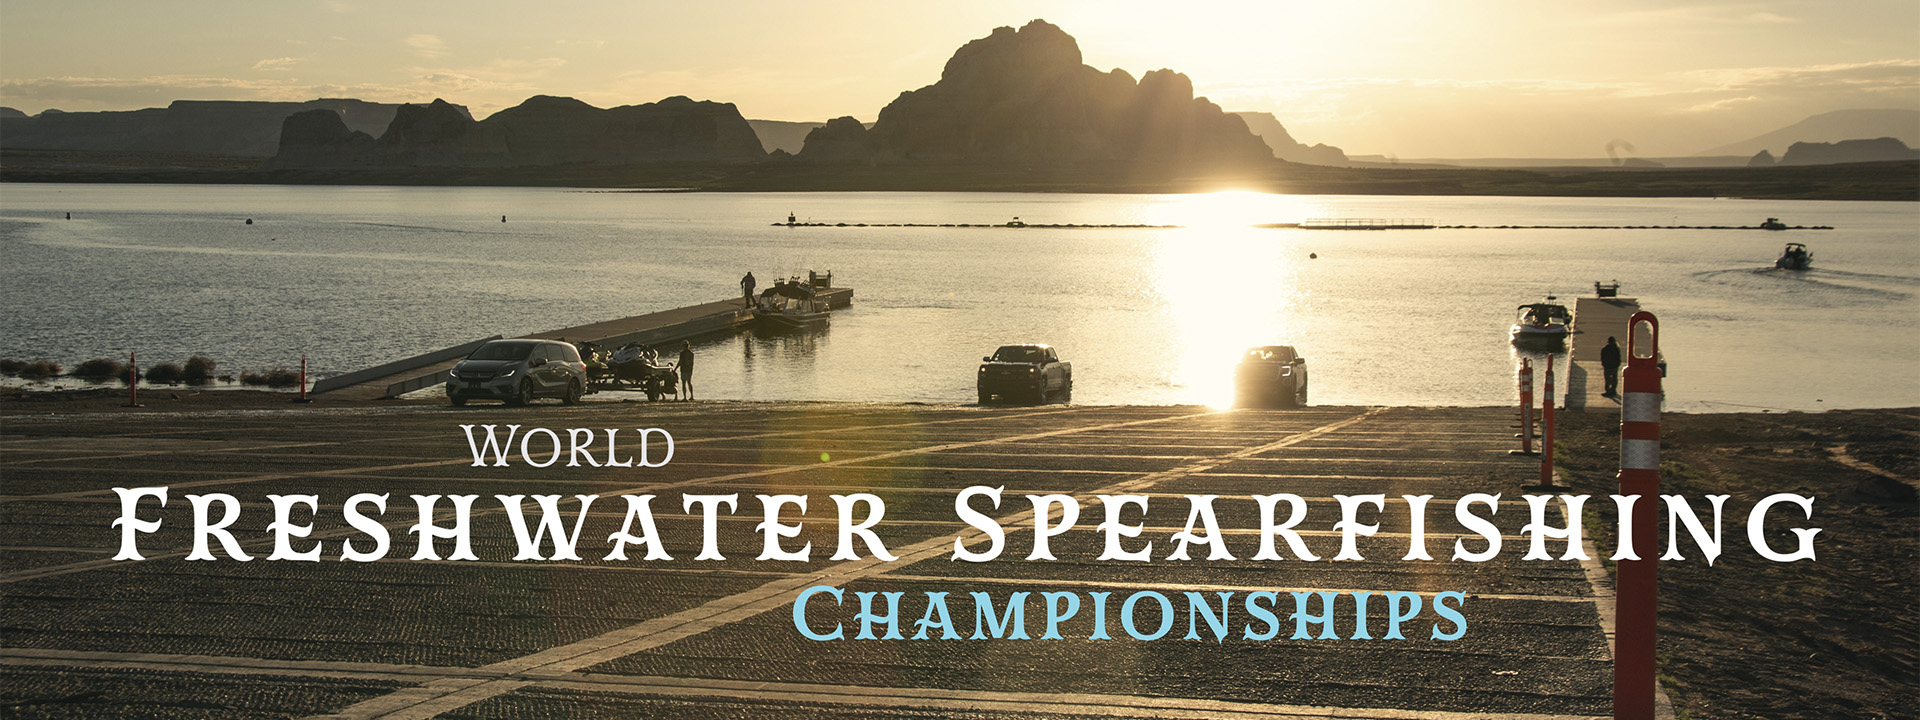 World Freshwater Spearfishing Championships Documentary - Wilderness Mindset